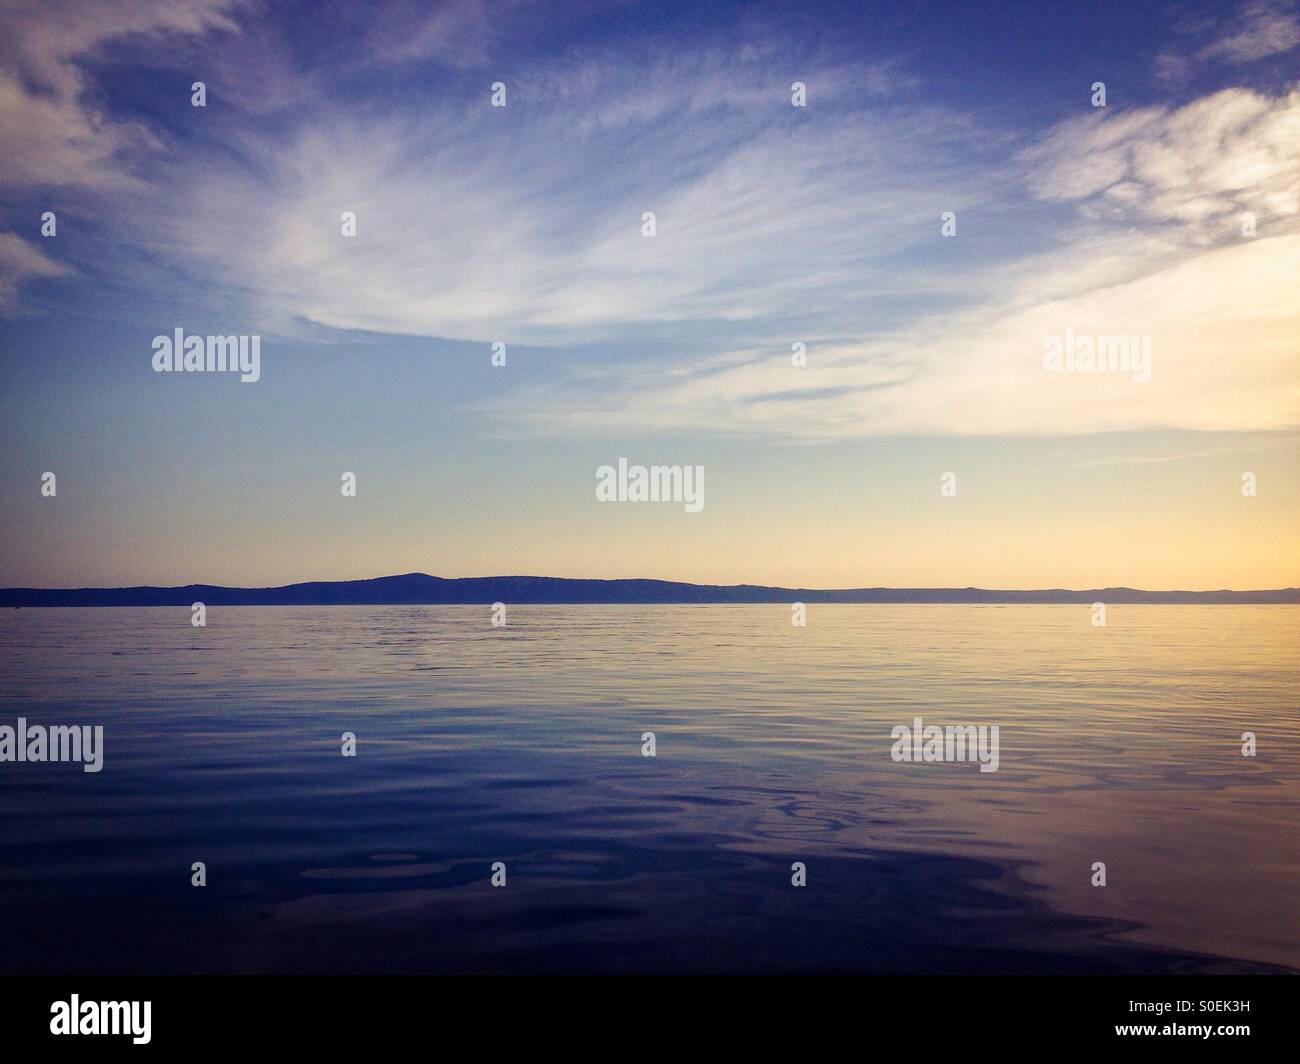 Landscape scene of calm blue Adriatic sea with island in background Stock Photo